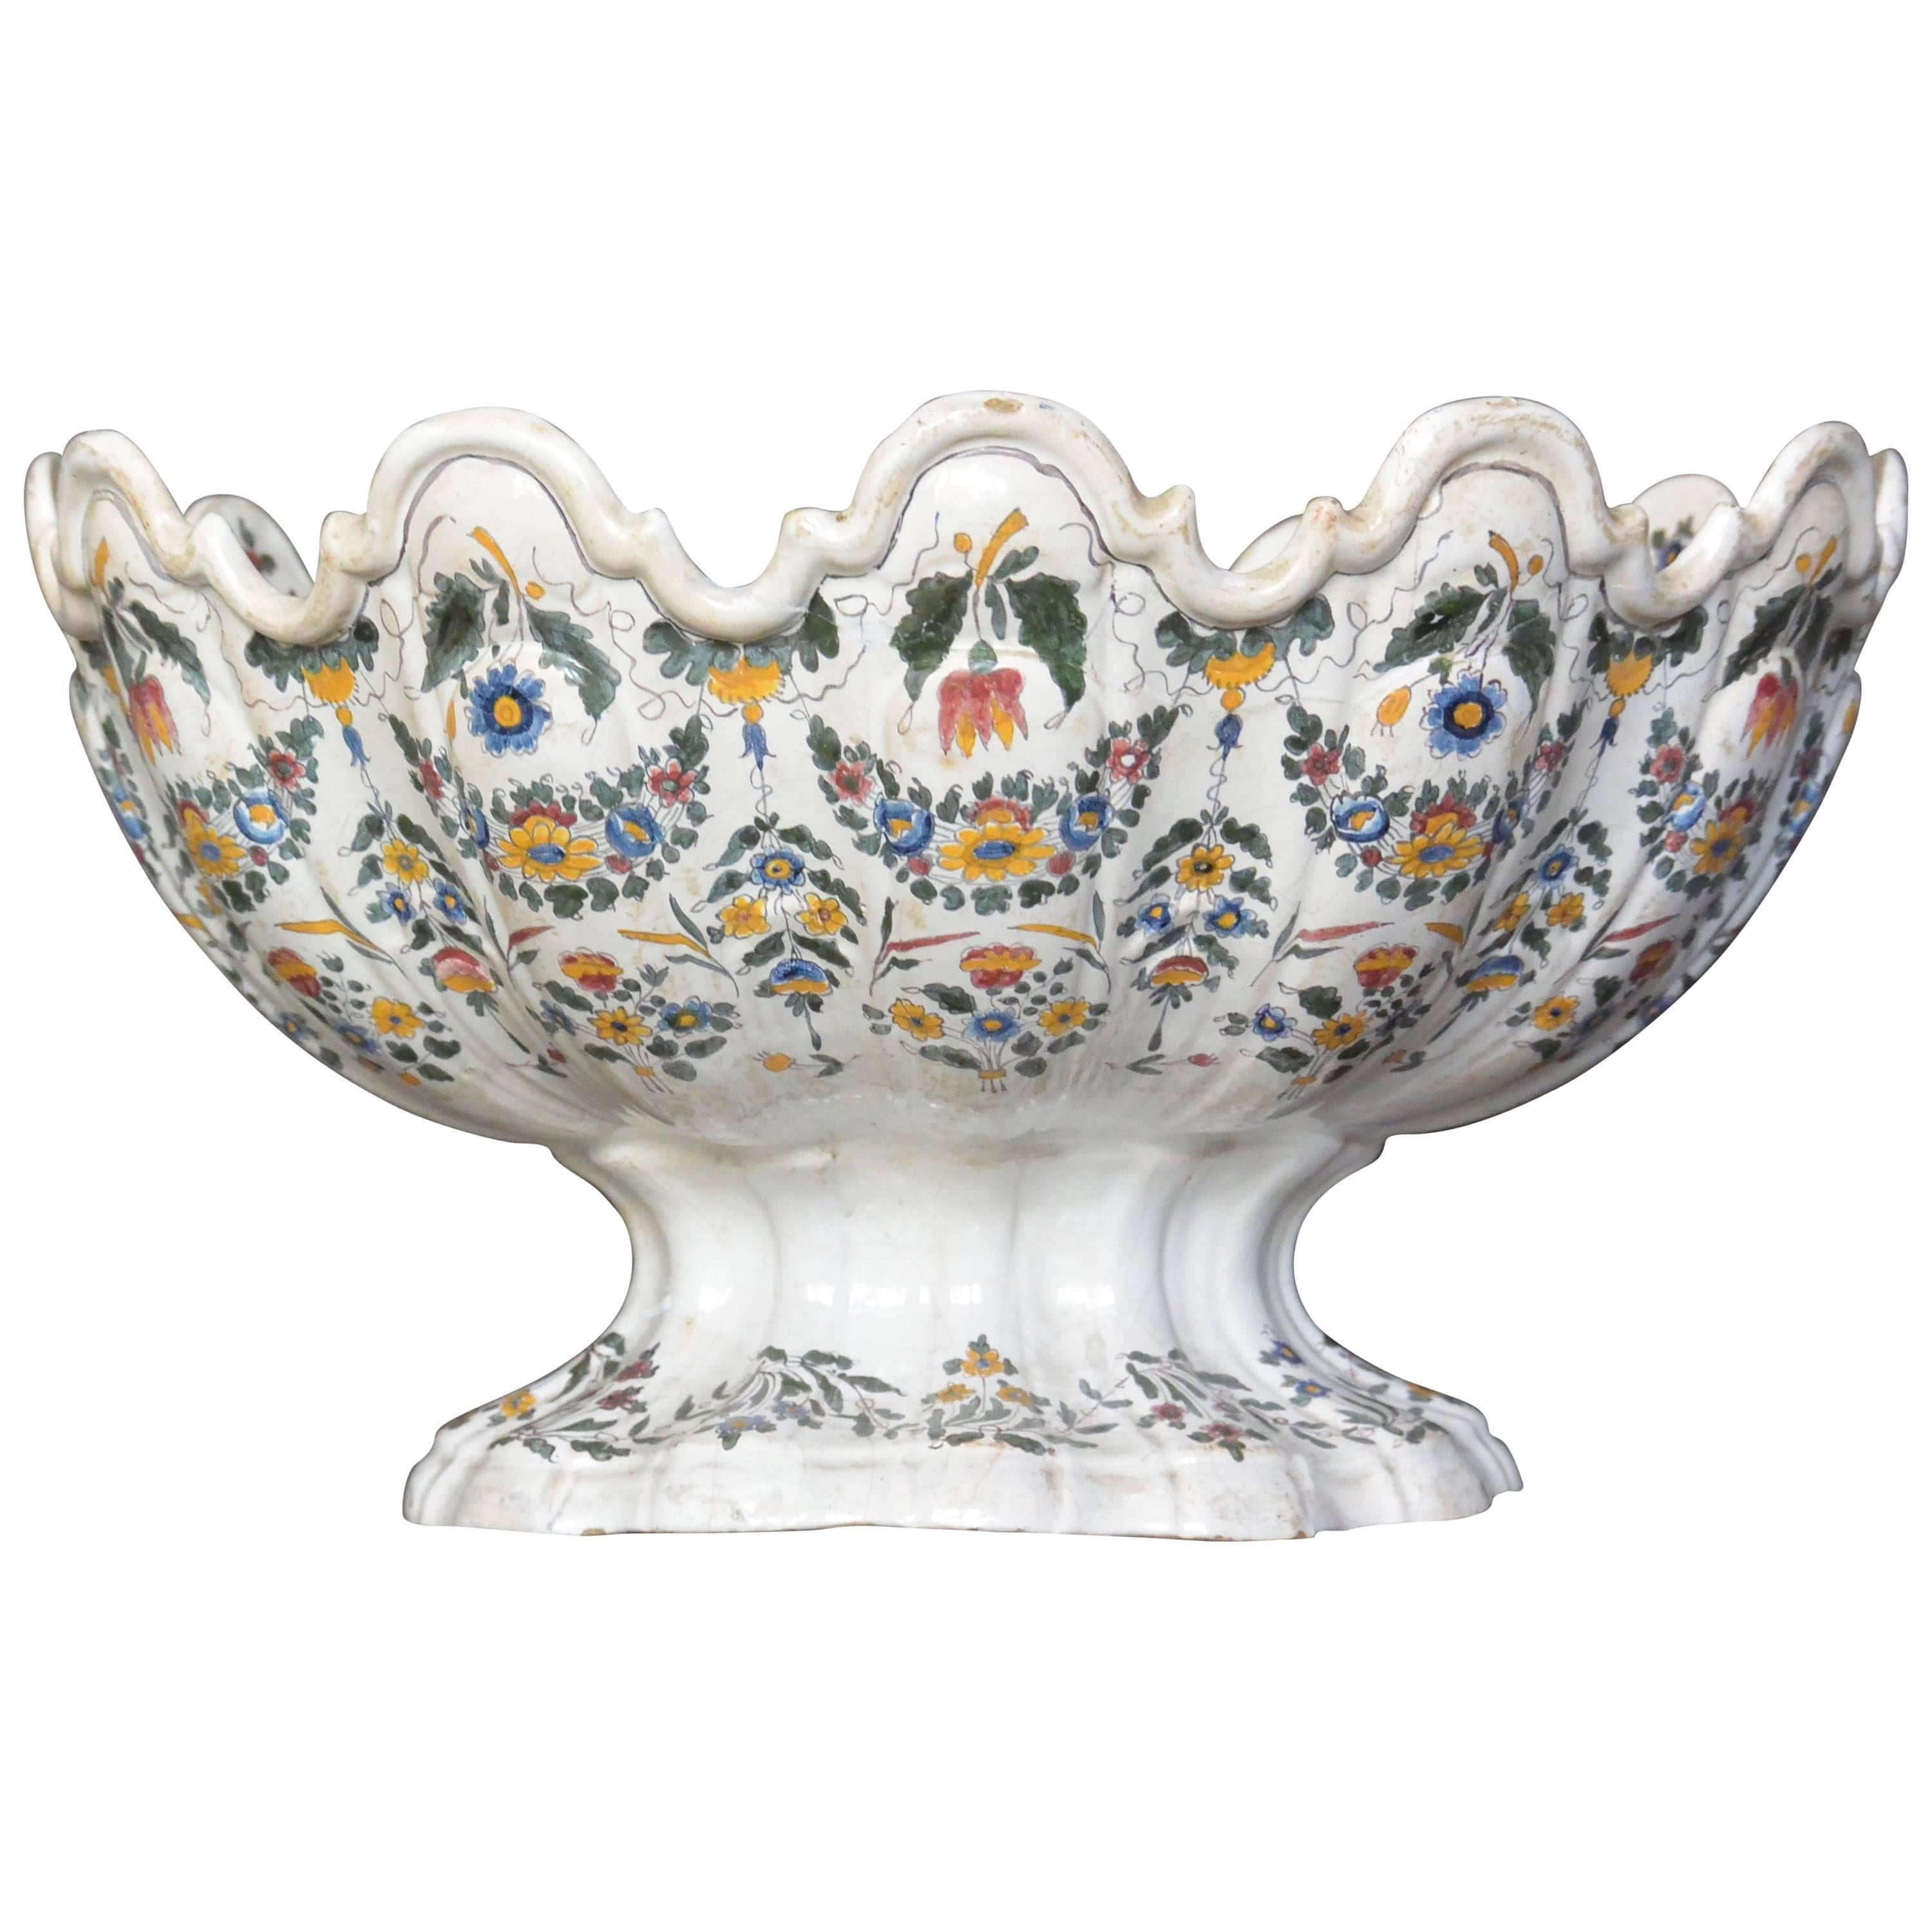 Very Large Bassano Floral Centerpiece Bowl